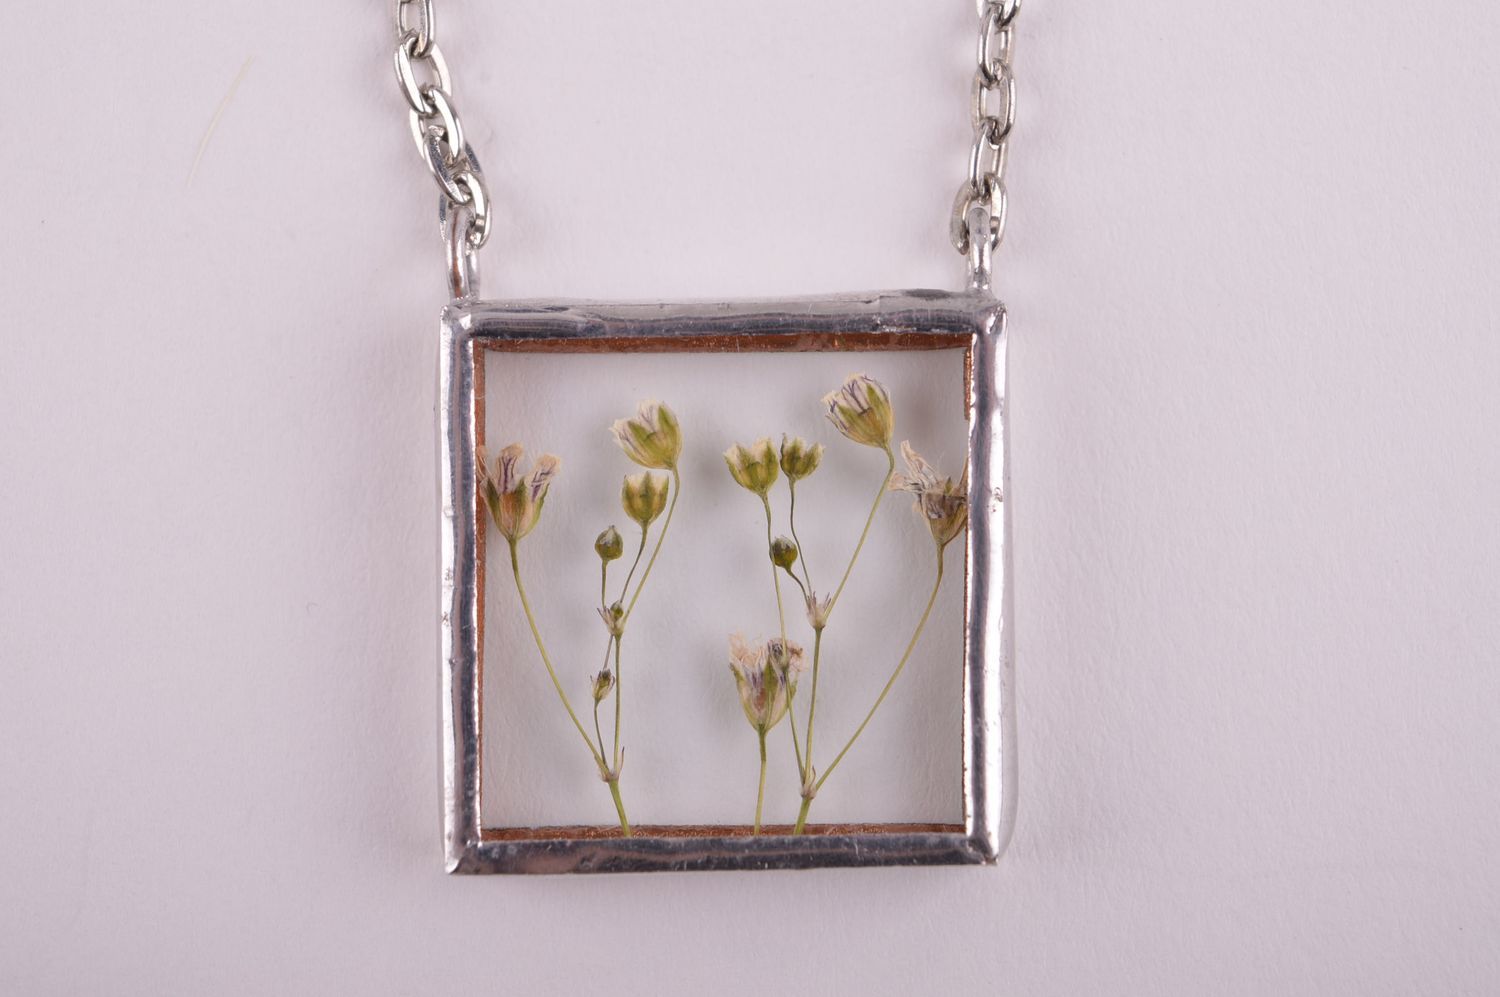 Stylish handmade glass pendant fashion accessories botanical jewelry designs photo 3